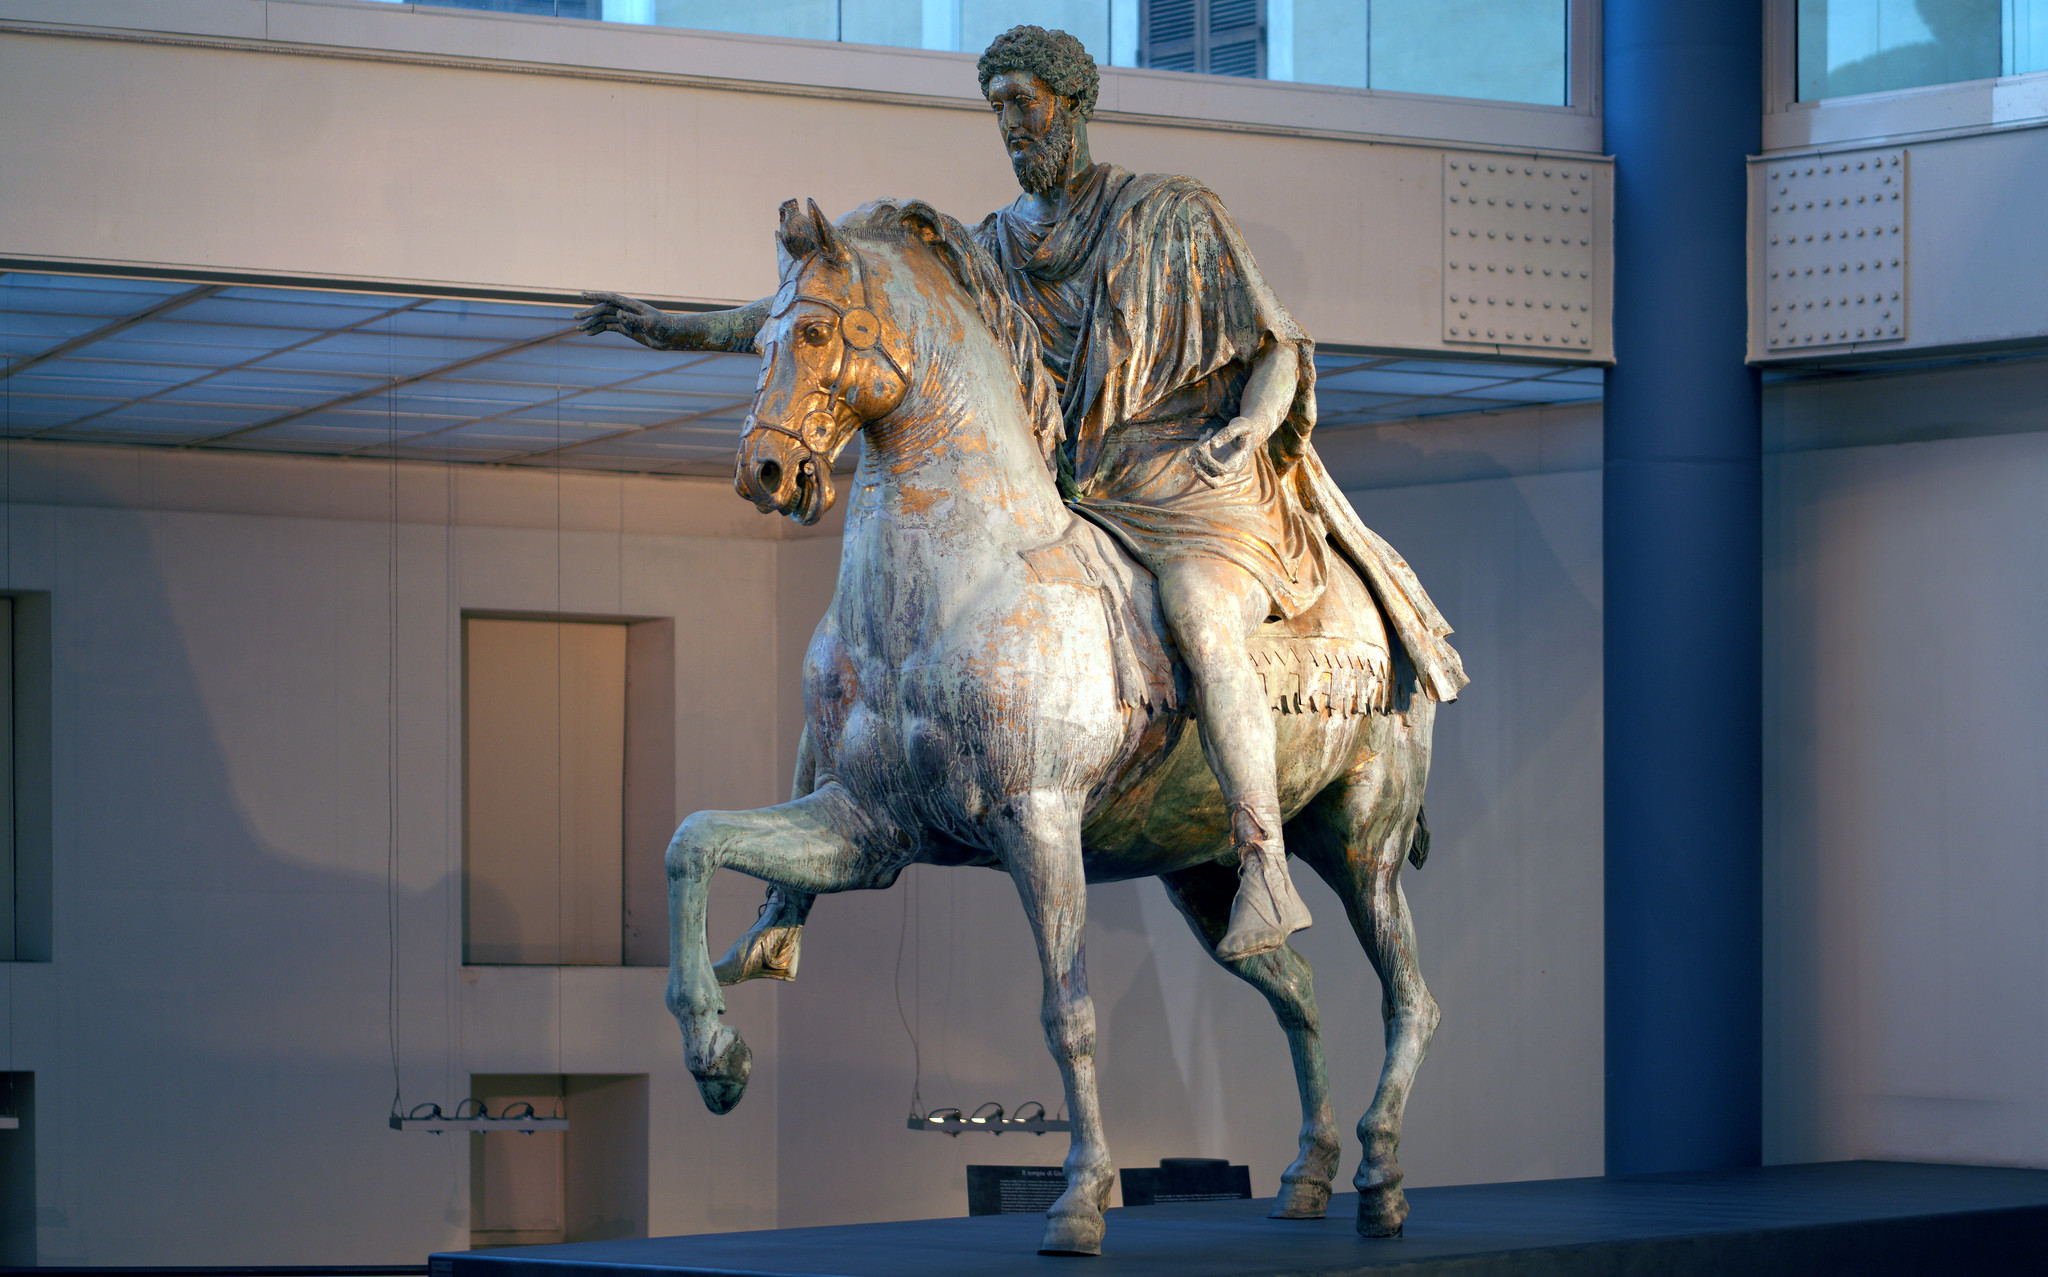 Brass Horse Head Statue / Mid Century Modern / Equestrian Statue